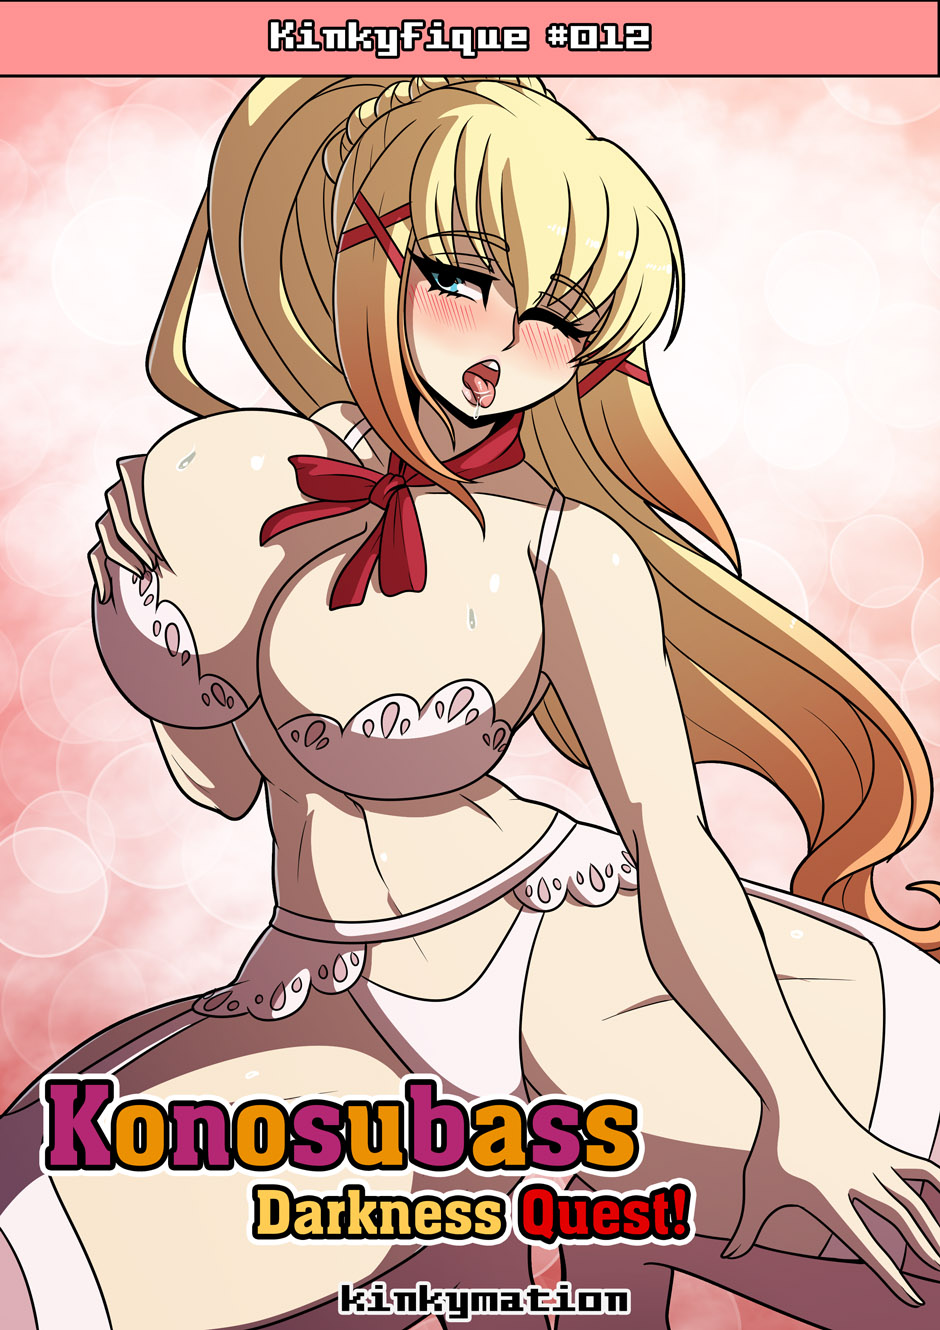 KONOSUBASS - Darkness Quest!